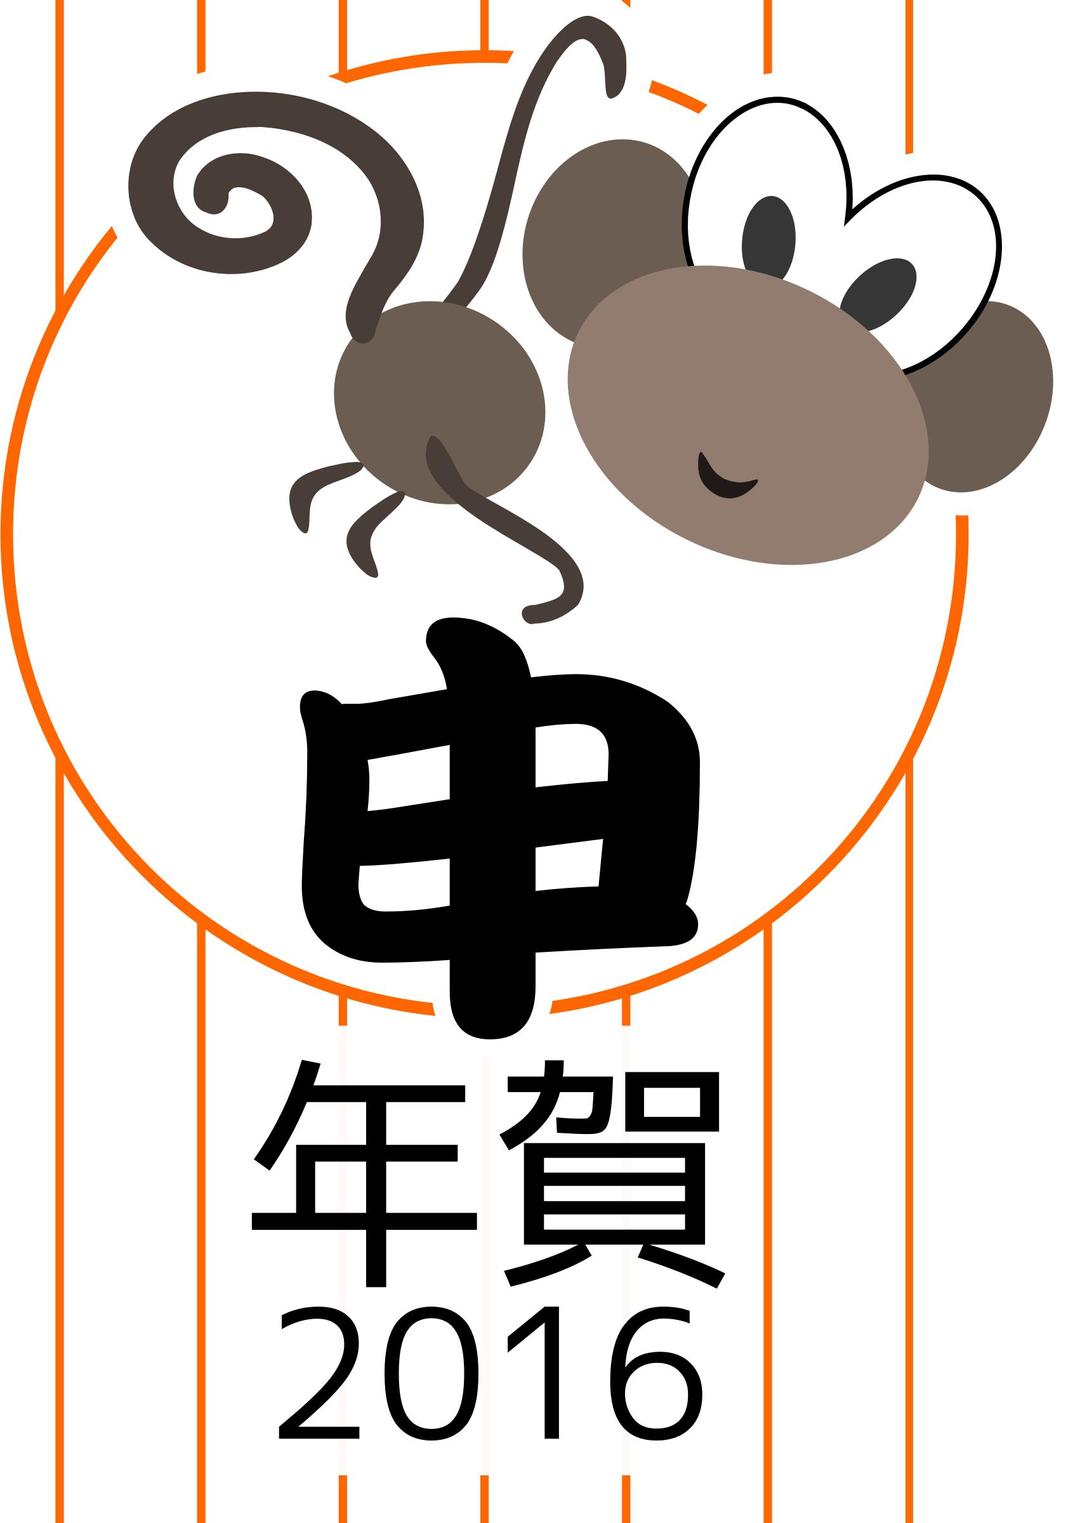 Chinese zodiac monkey - Japanese version - 2016 png transparent